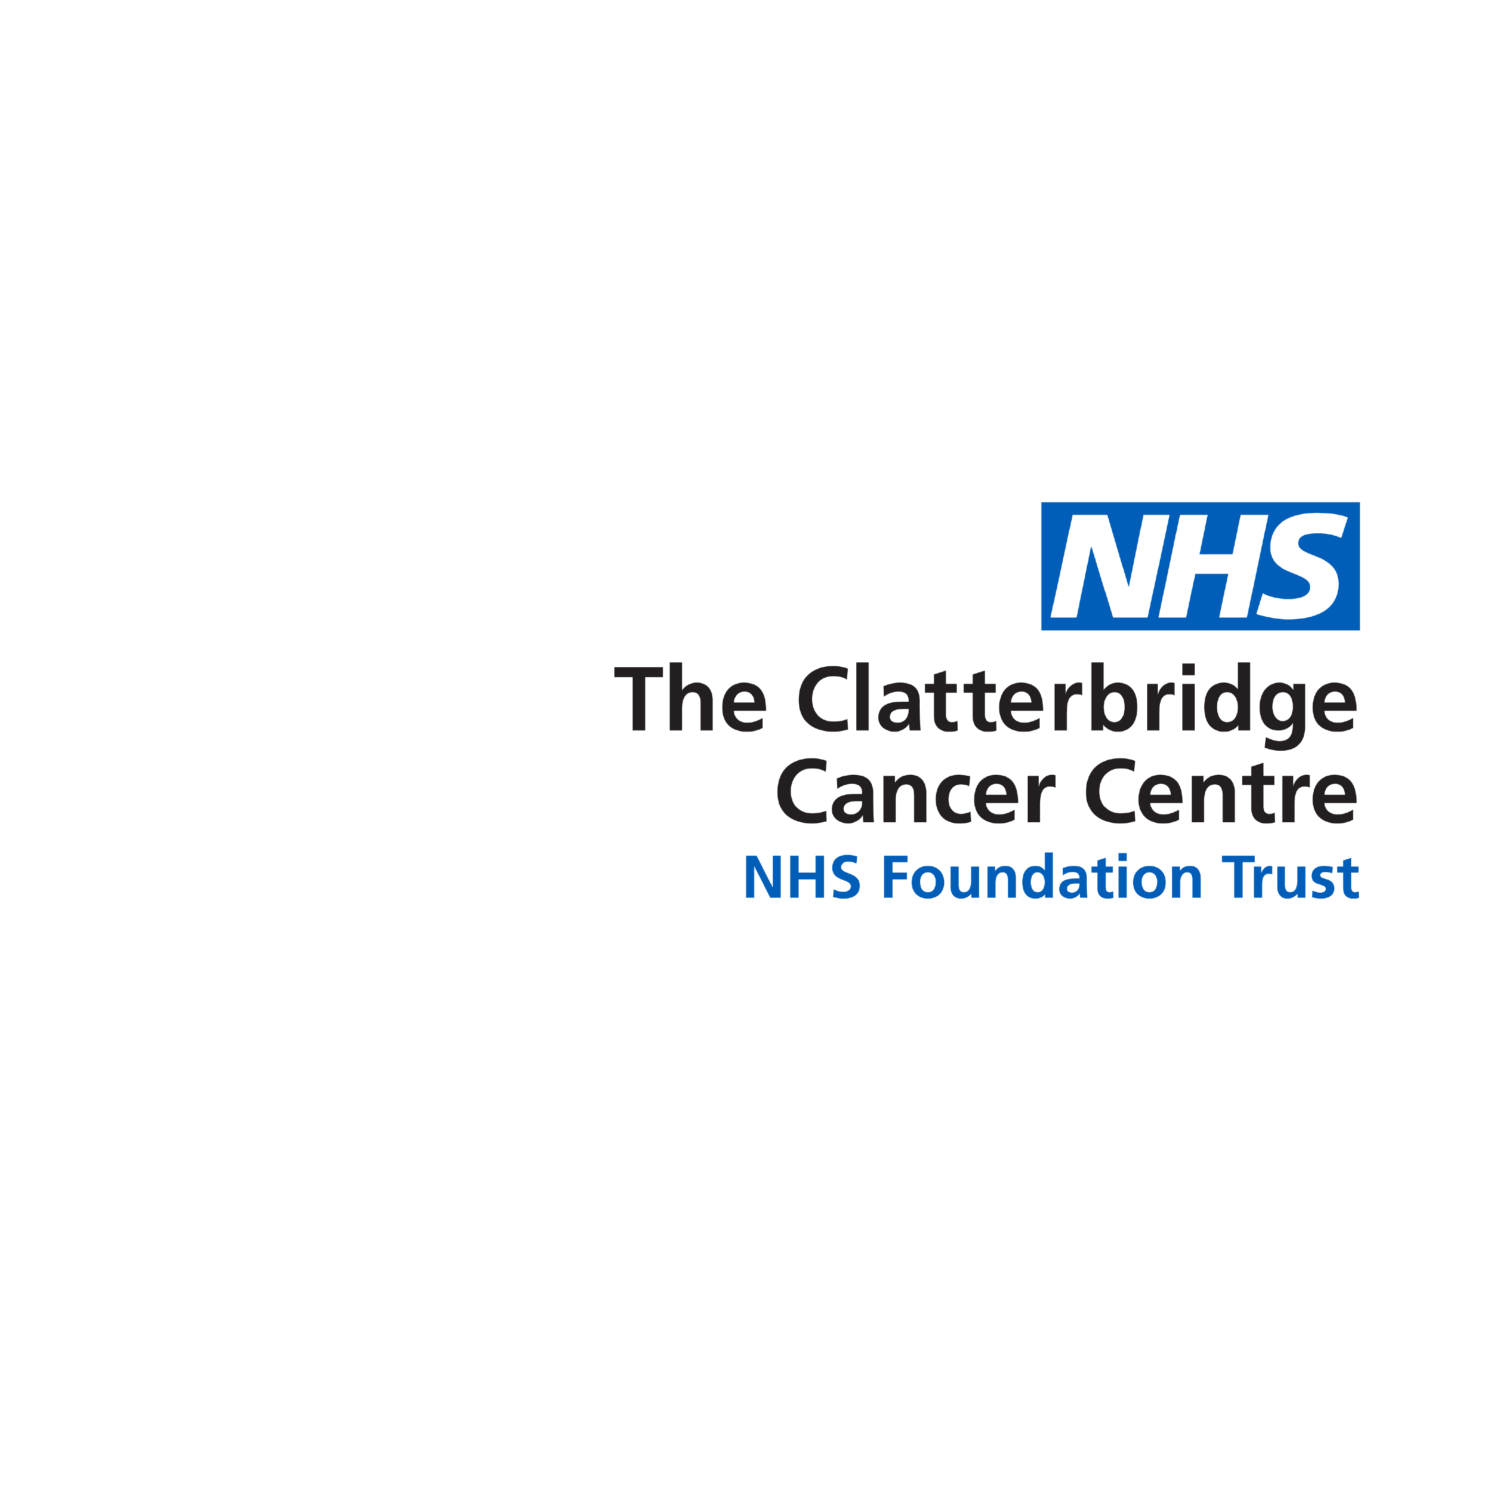 The Clatterbridge Cancer Centre logo